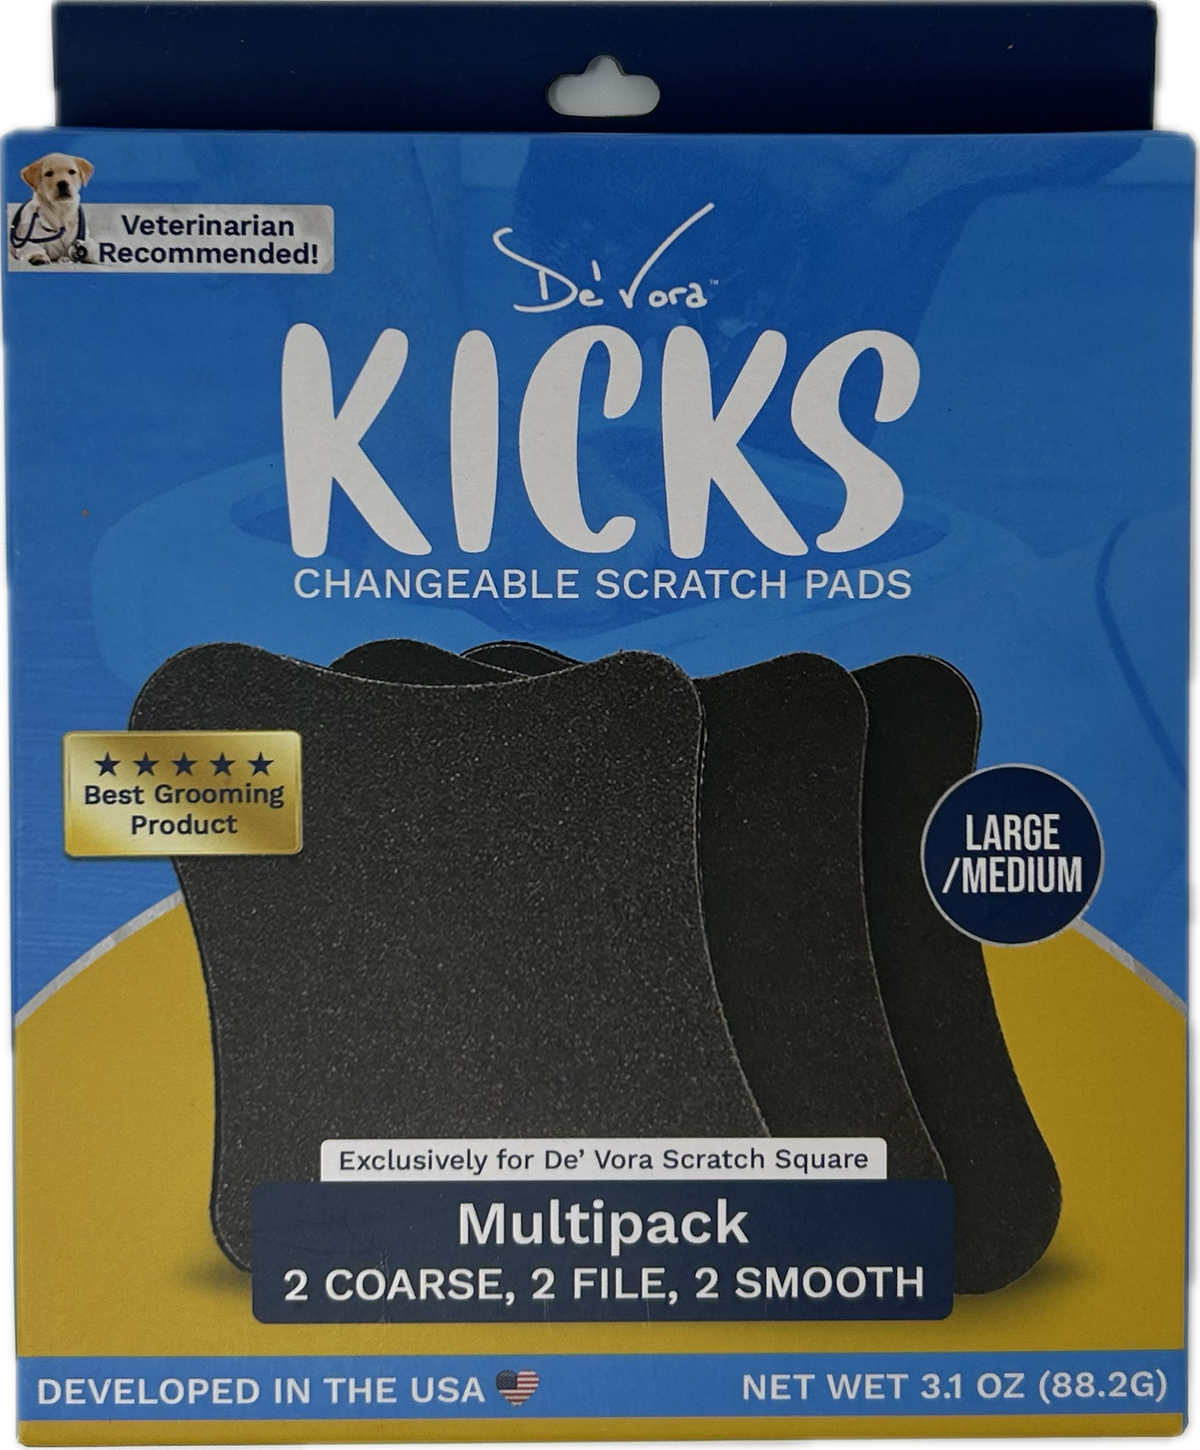 Medium/Large Kicks Changeable Scratch Pads